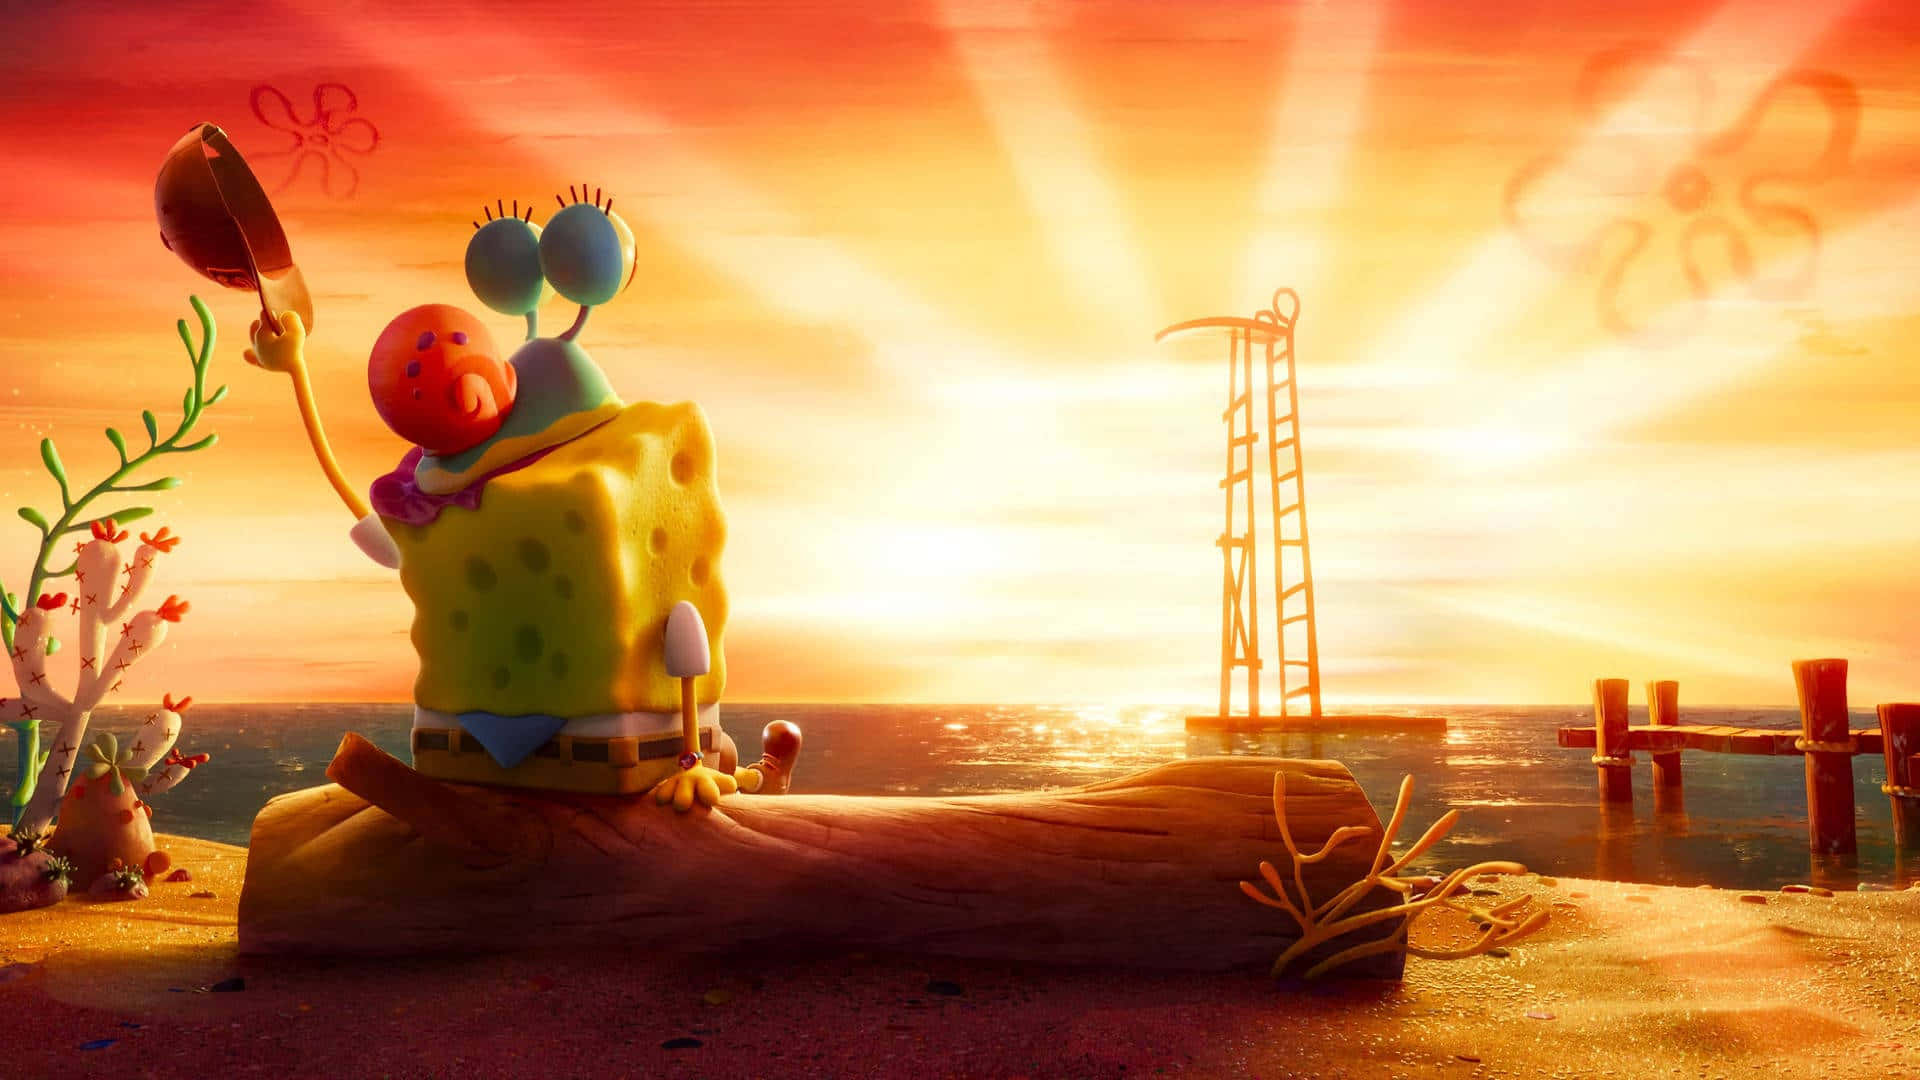 Aesthetic Spongebob Background to Brighten Your Day